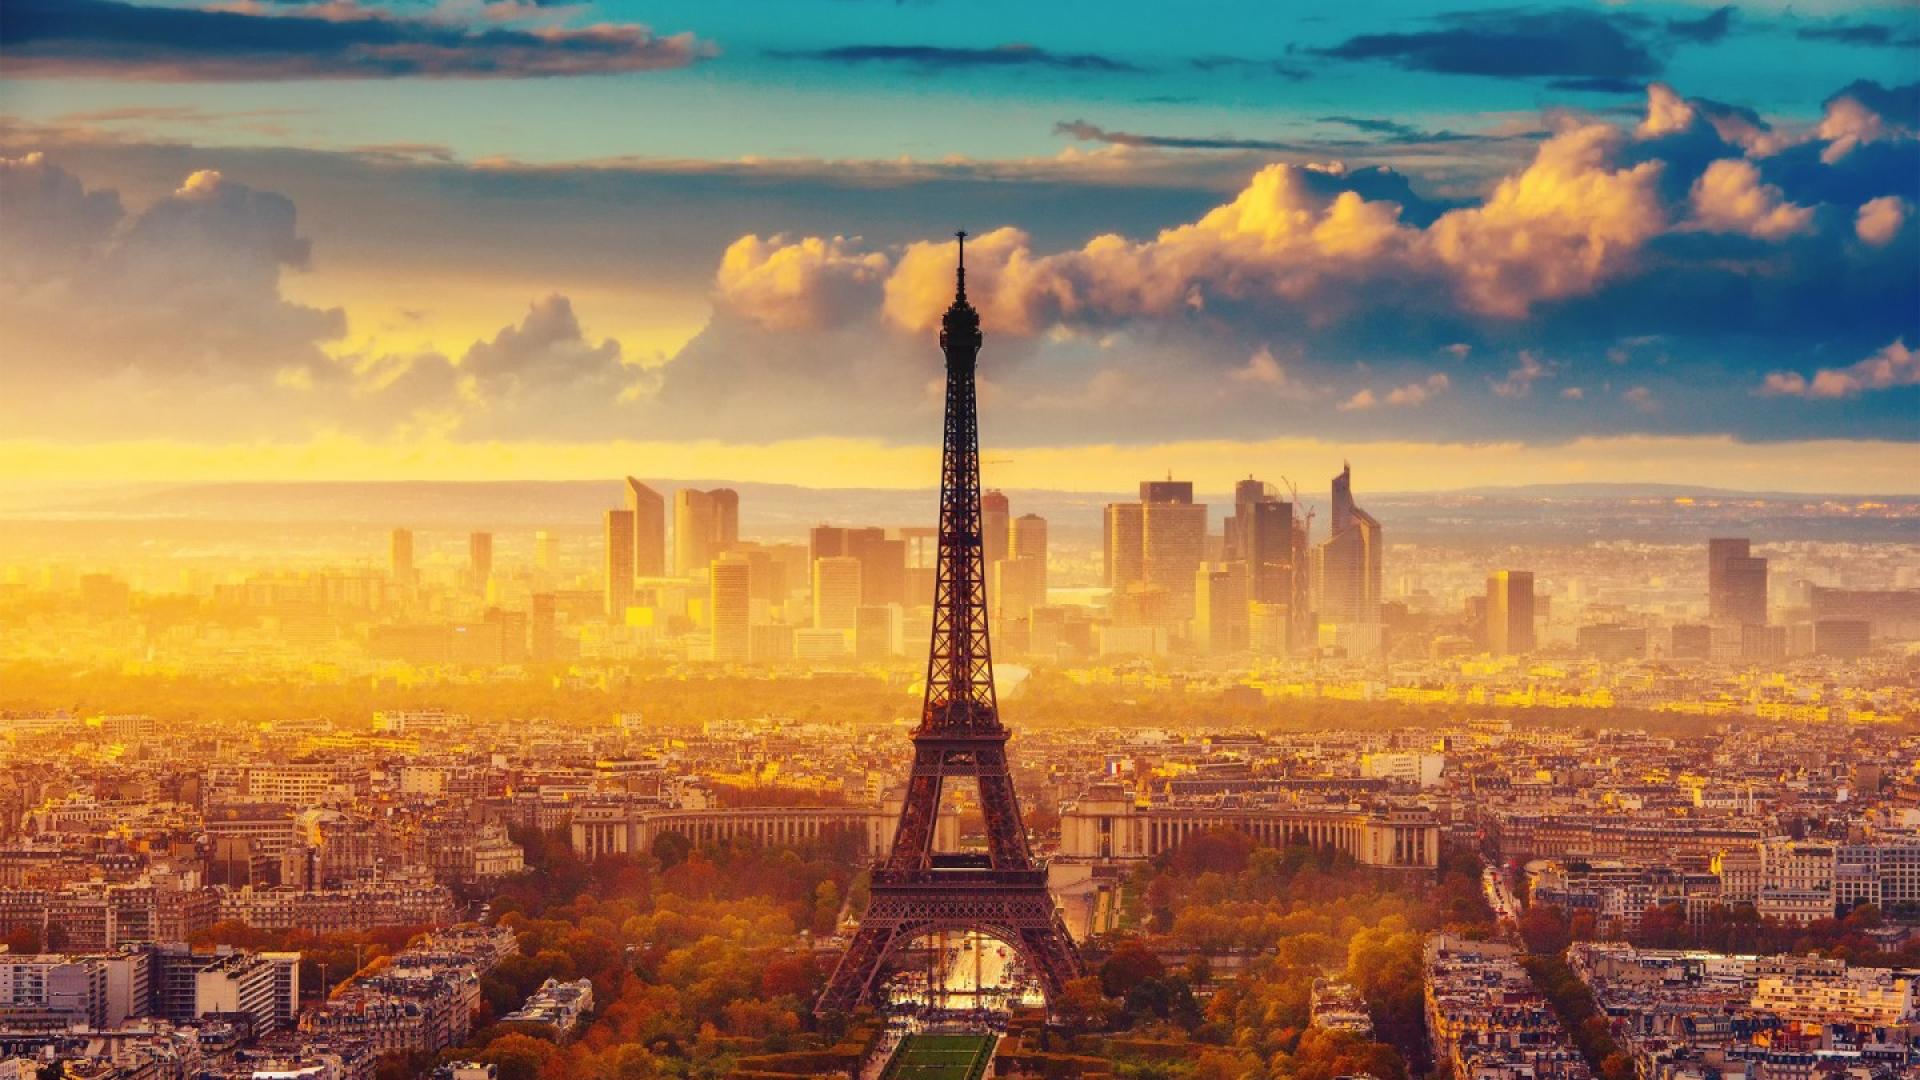 General 1920x1080 Eiffel Tower street view Paris France construction sky sunlight clouds cityscape landmark